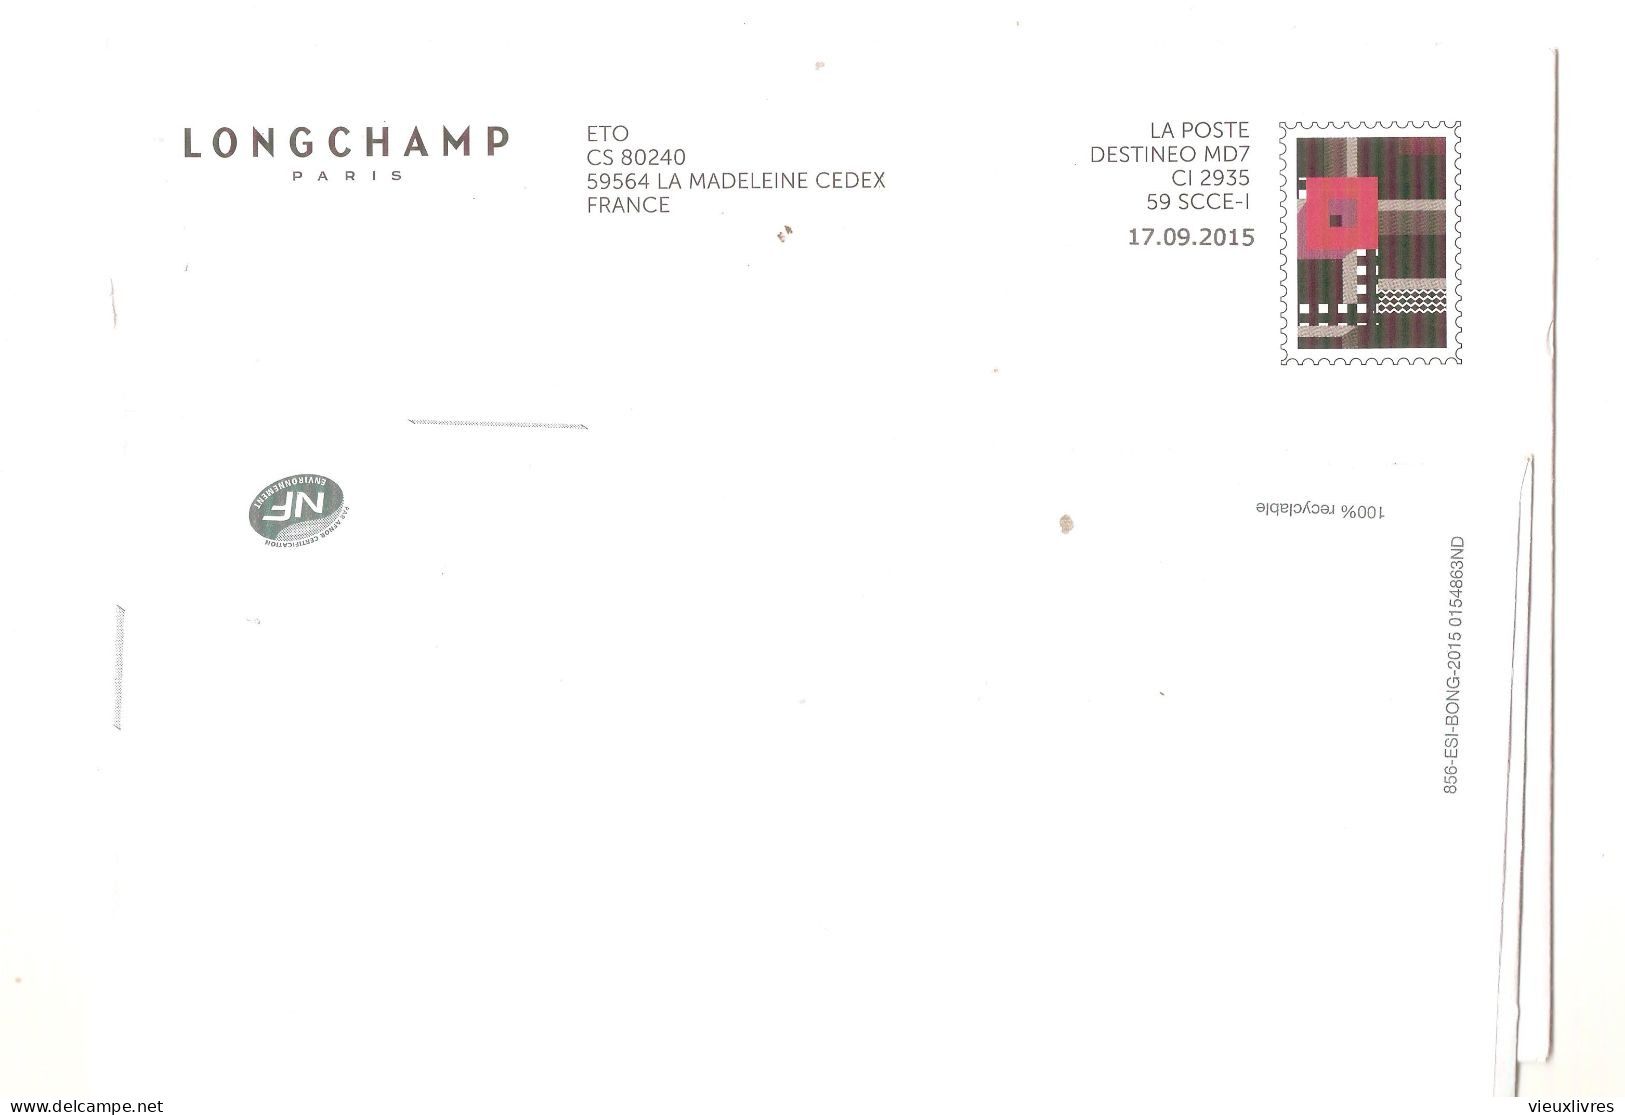 Longchamp Pseudo-entier Postal Sur Enveloppe Destineo MD7 CI 2935 59 SCCE-1 CS 80240 59564 La Madeleine - Private Stationery